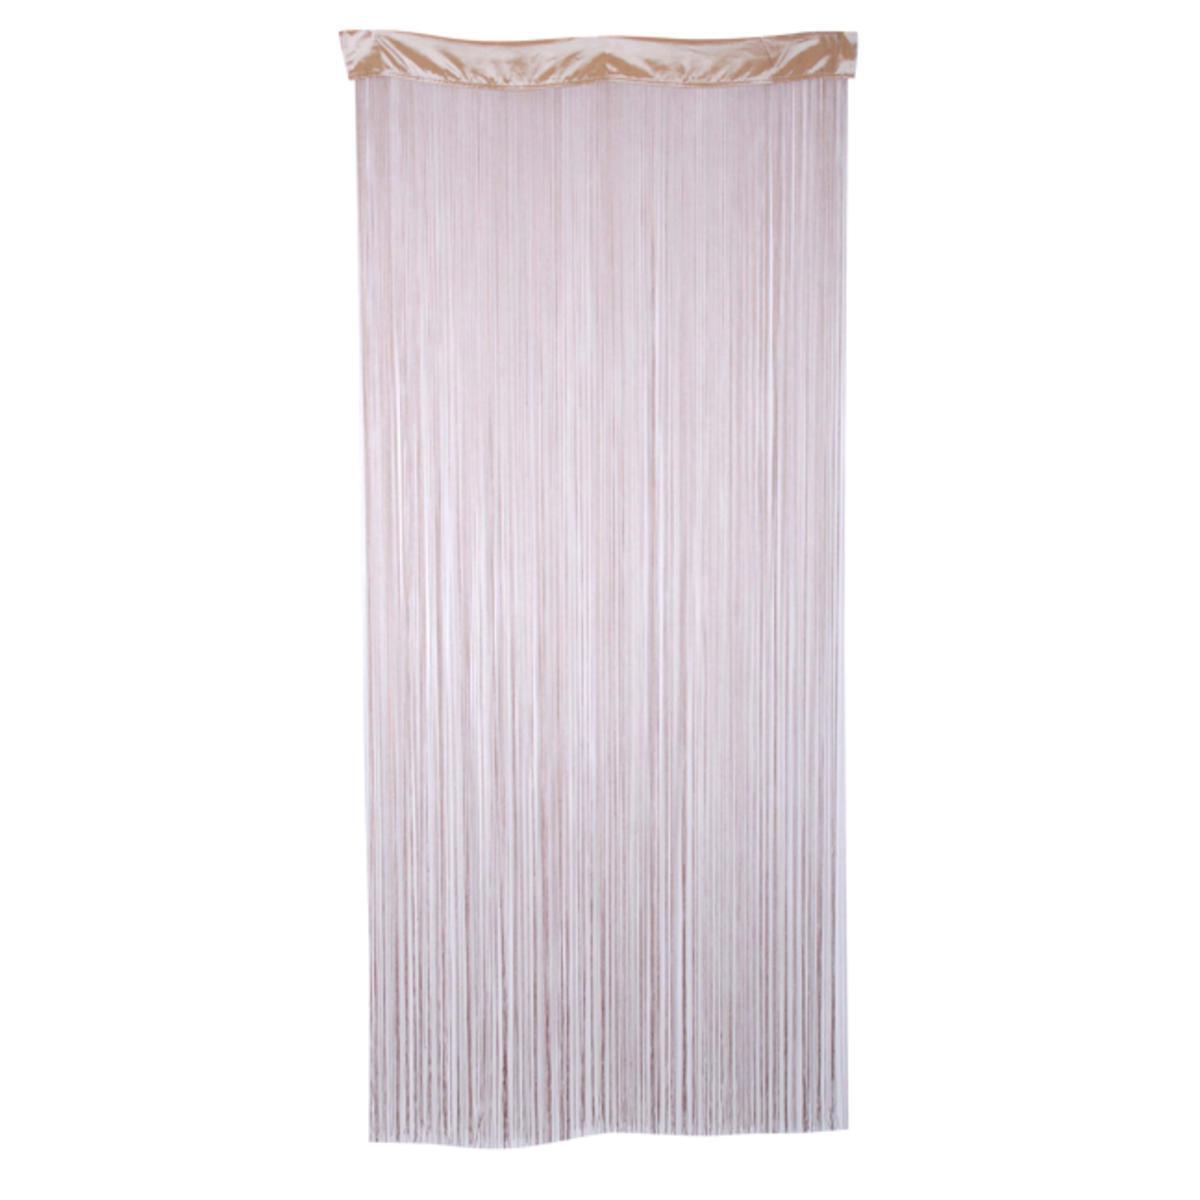 Rideau fils - Polyester - 90 x 200 cm - Marron taupe